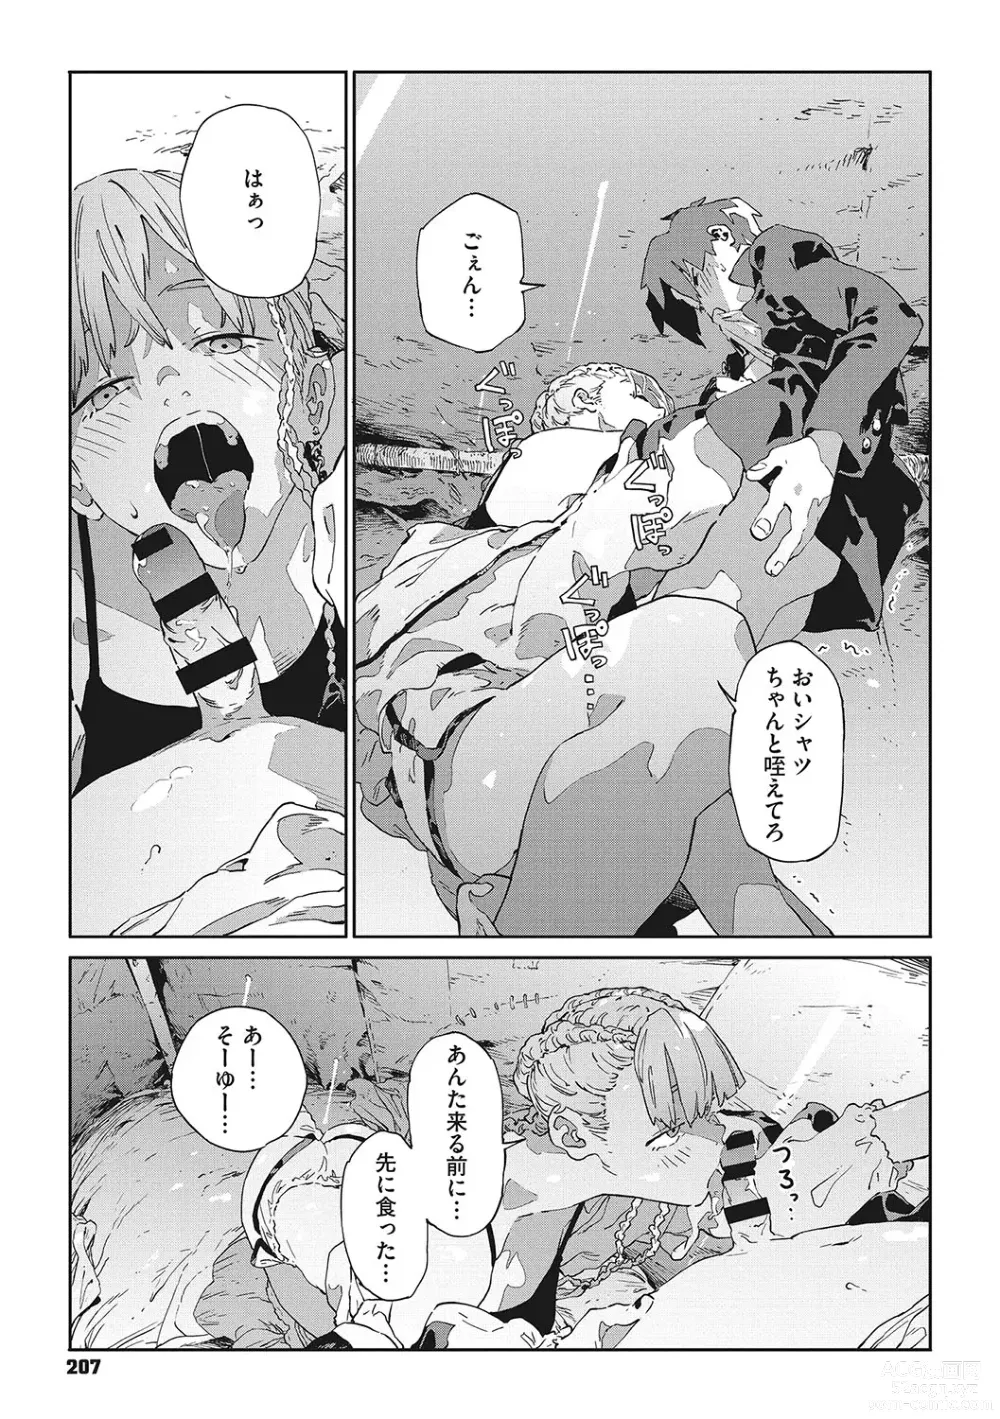 Page 206 of manga Ito o Yoru